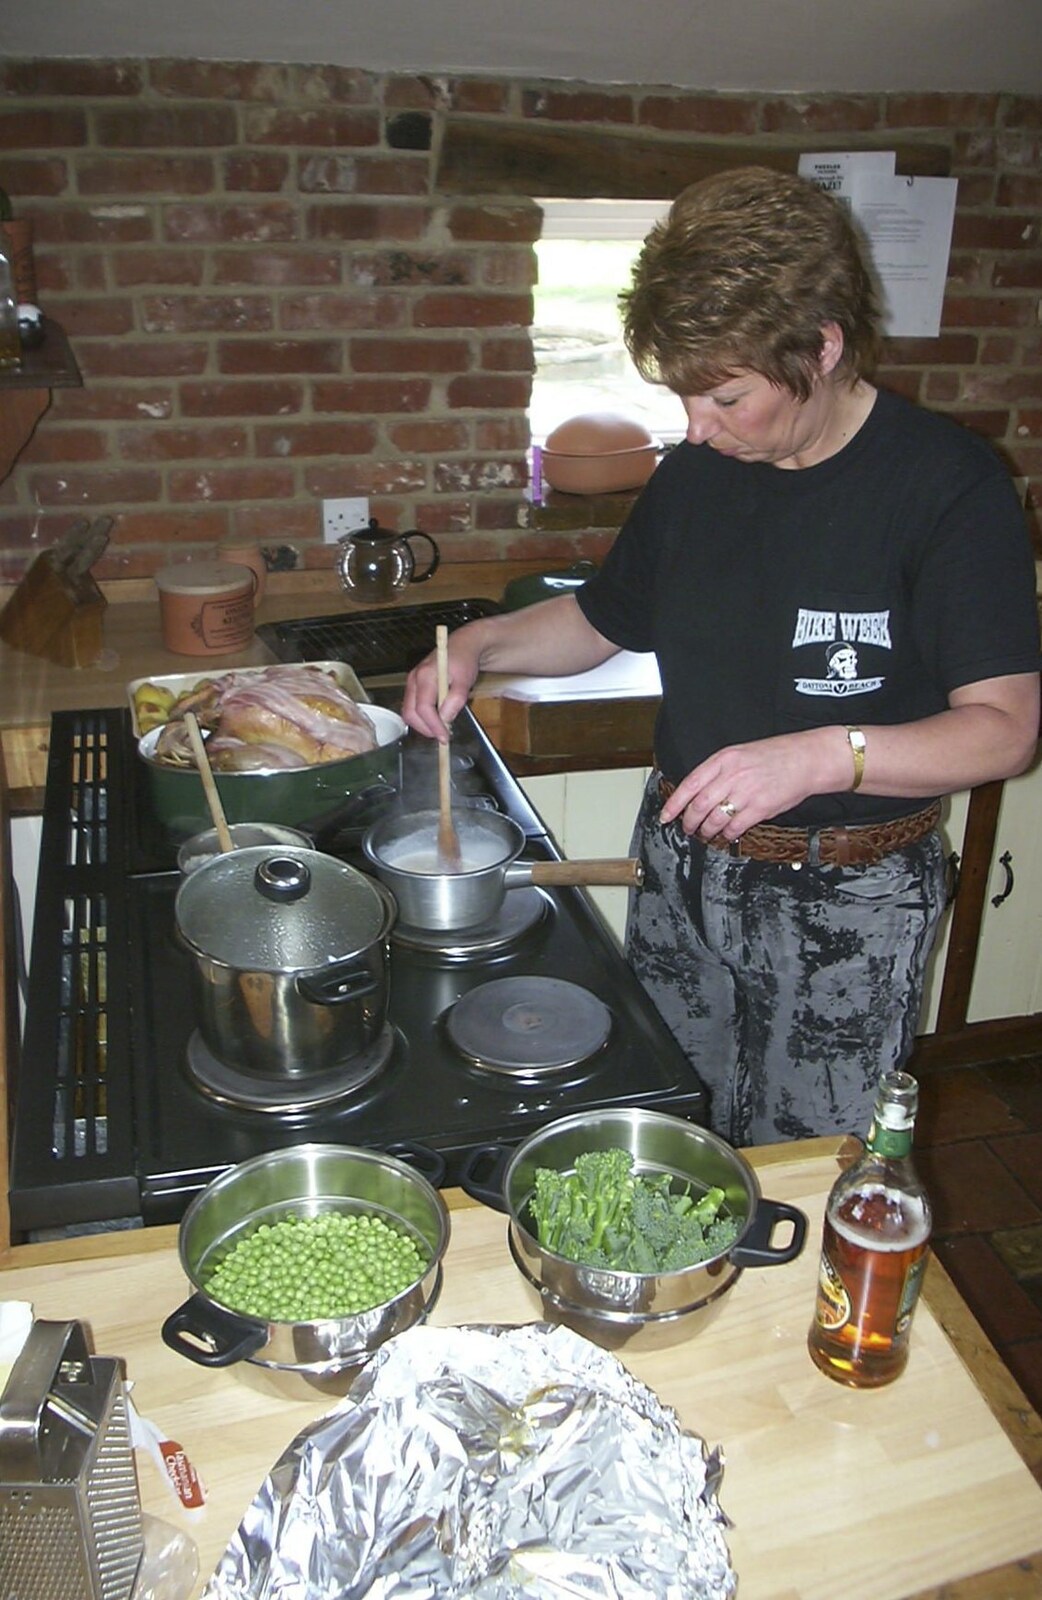 Carolyn on Sunday, Wymondham, Norfolk - 23rd March 2003: Jenny's on sauce duty